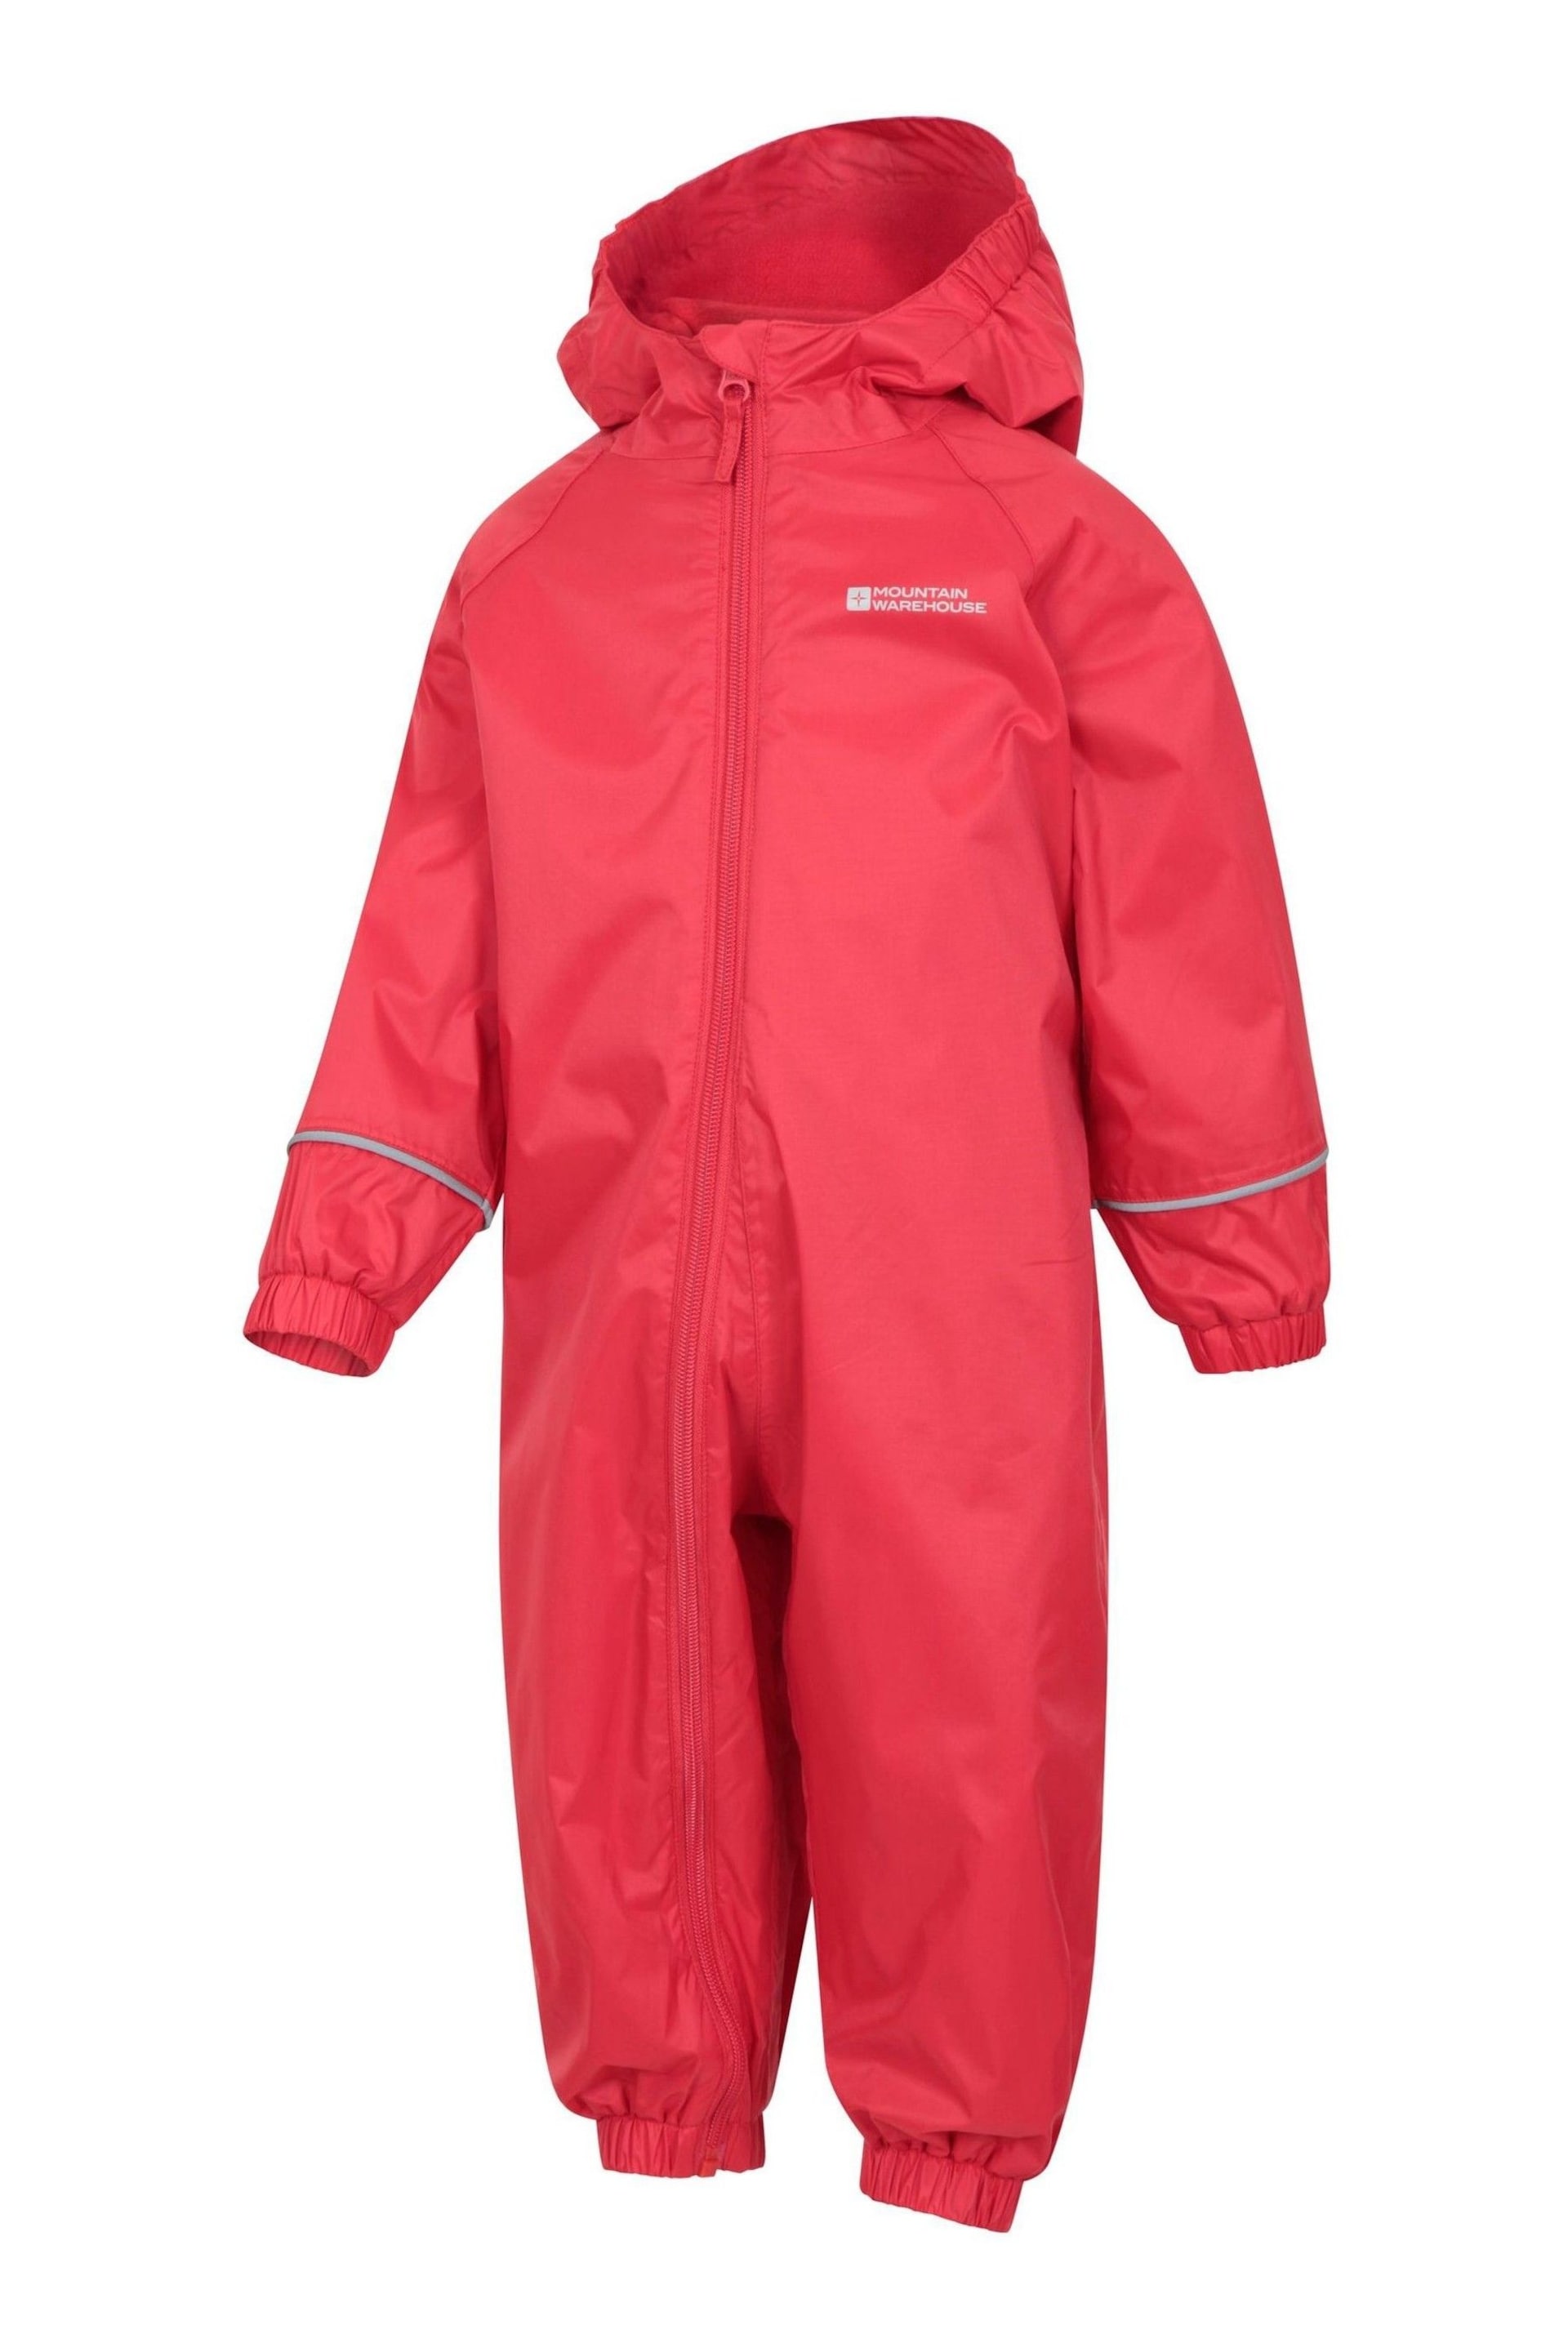 Mountain Warehouse Red Junior Spright Waterproof Fleece Lined Rainsuit - Image 4 of 5